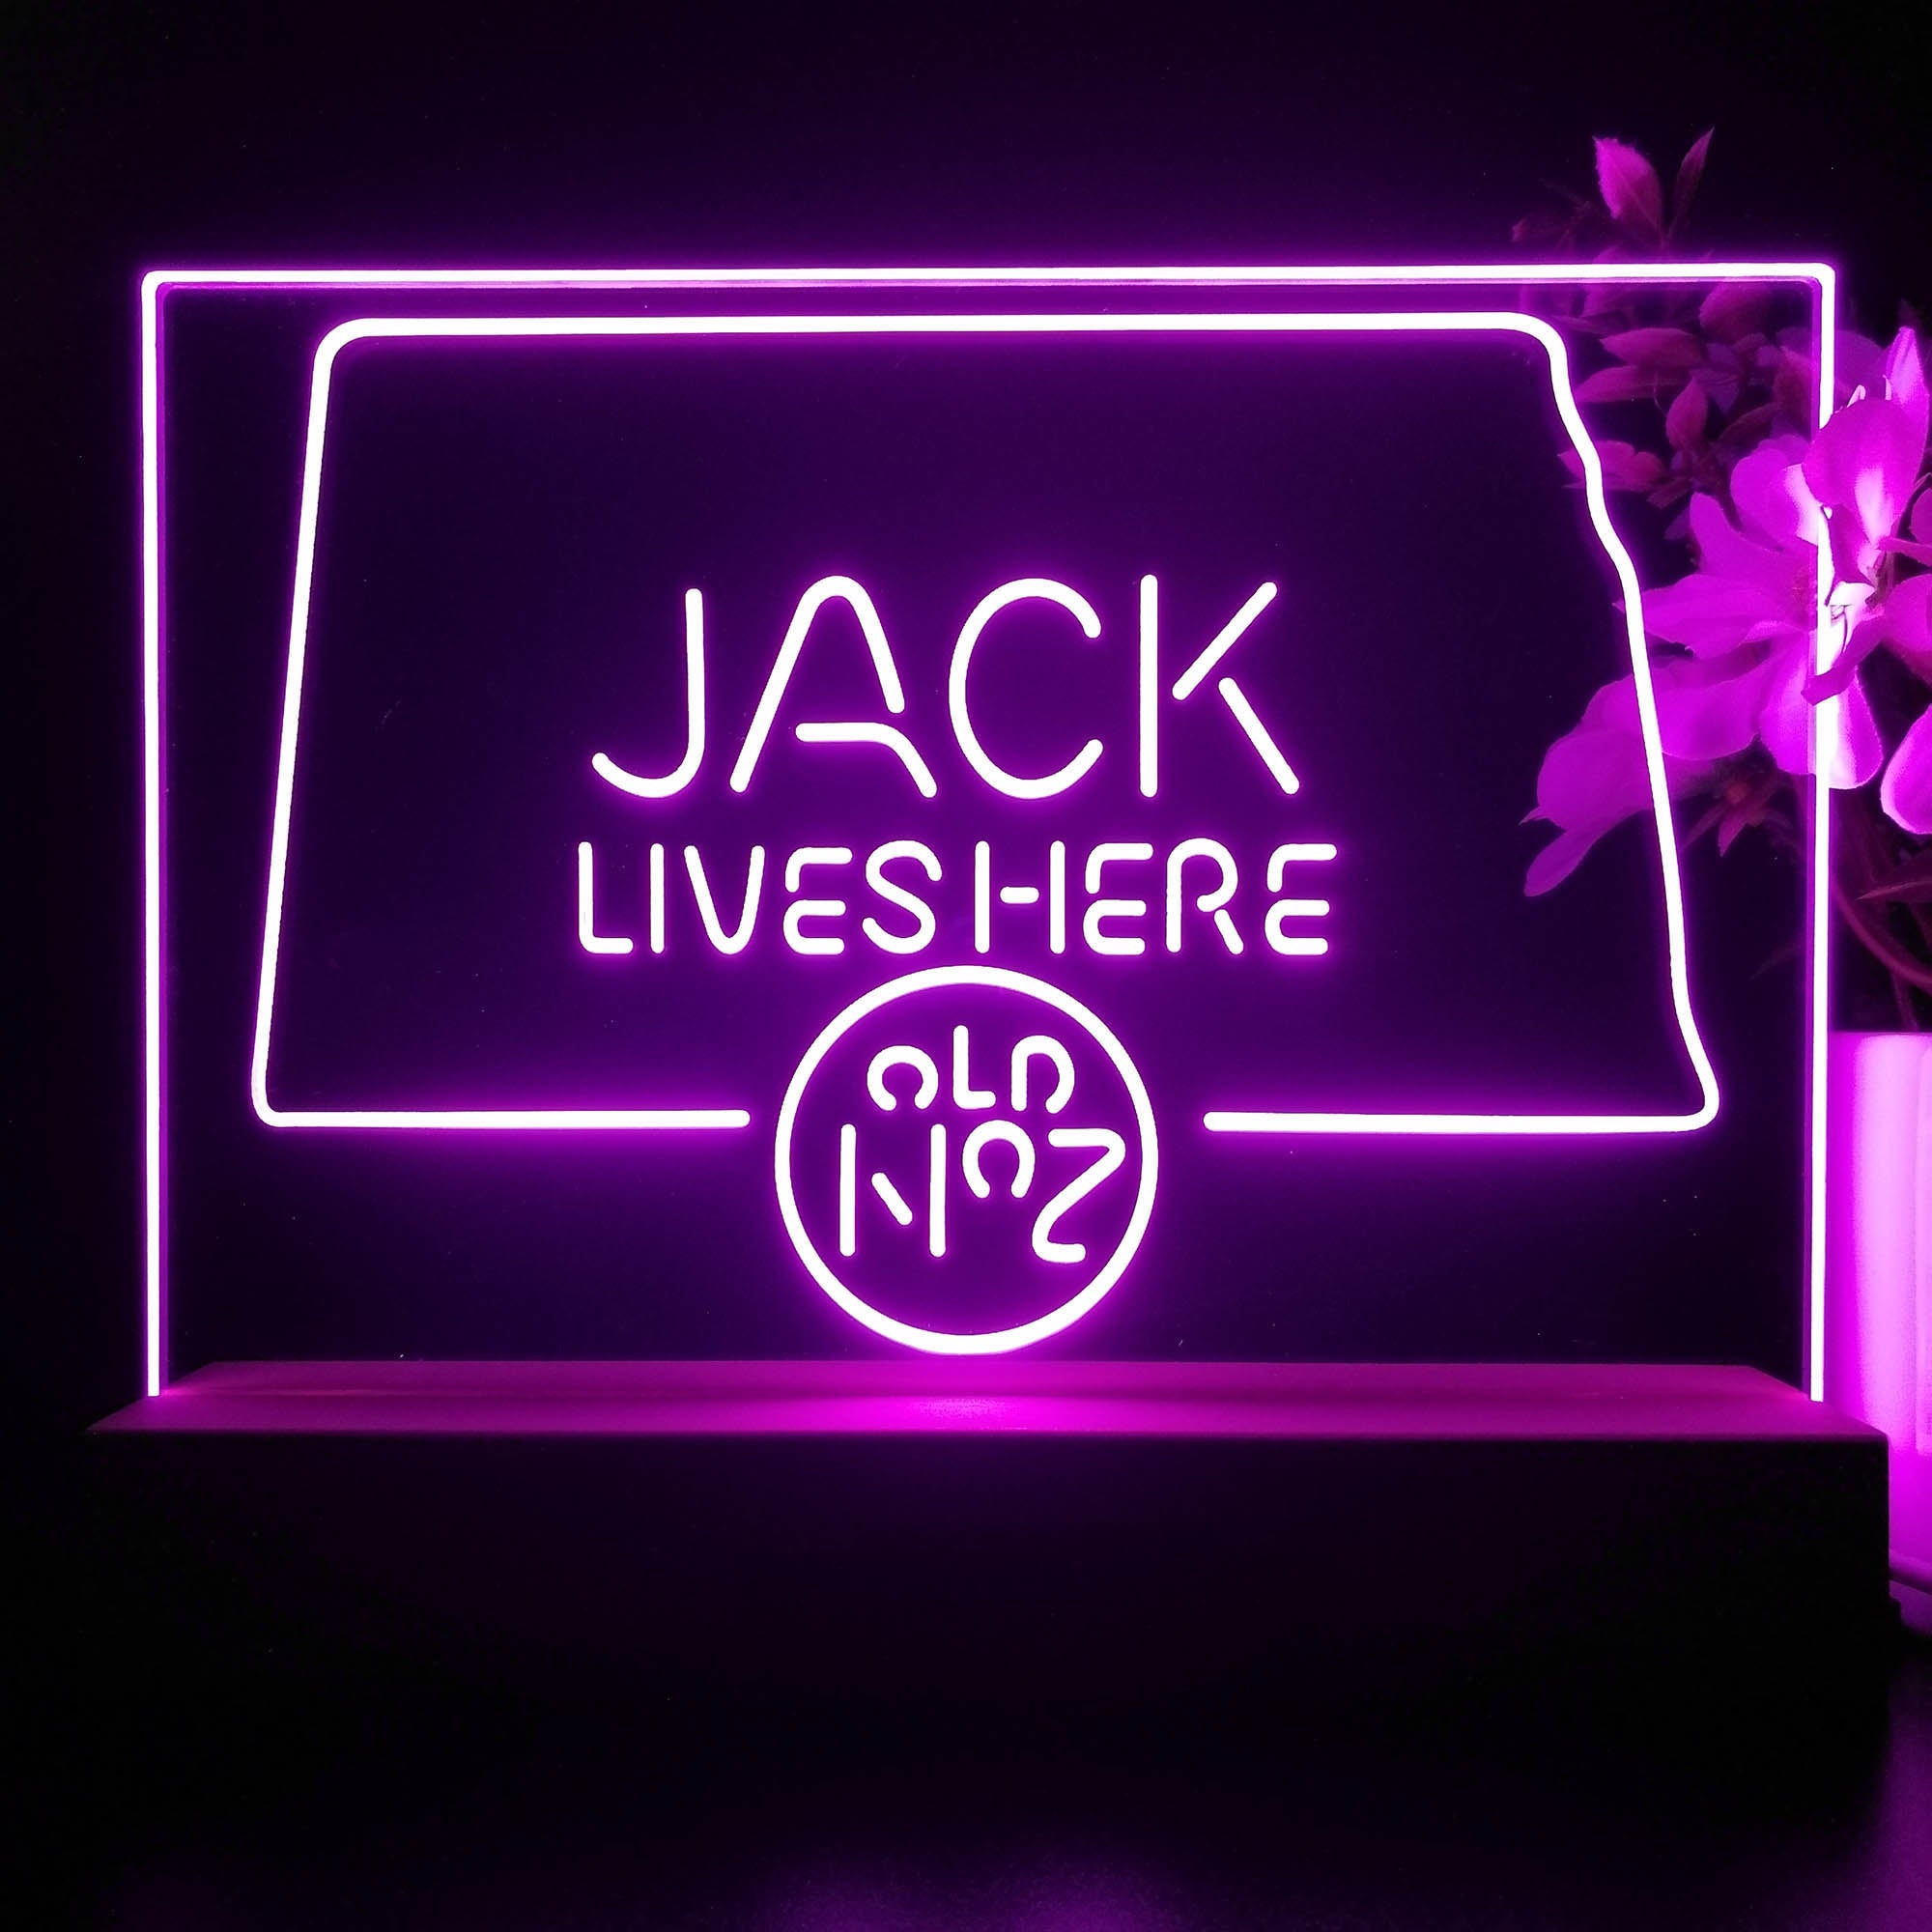 North Dakota Jack Lives Here Neon Sign Pub Bar Lamp